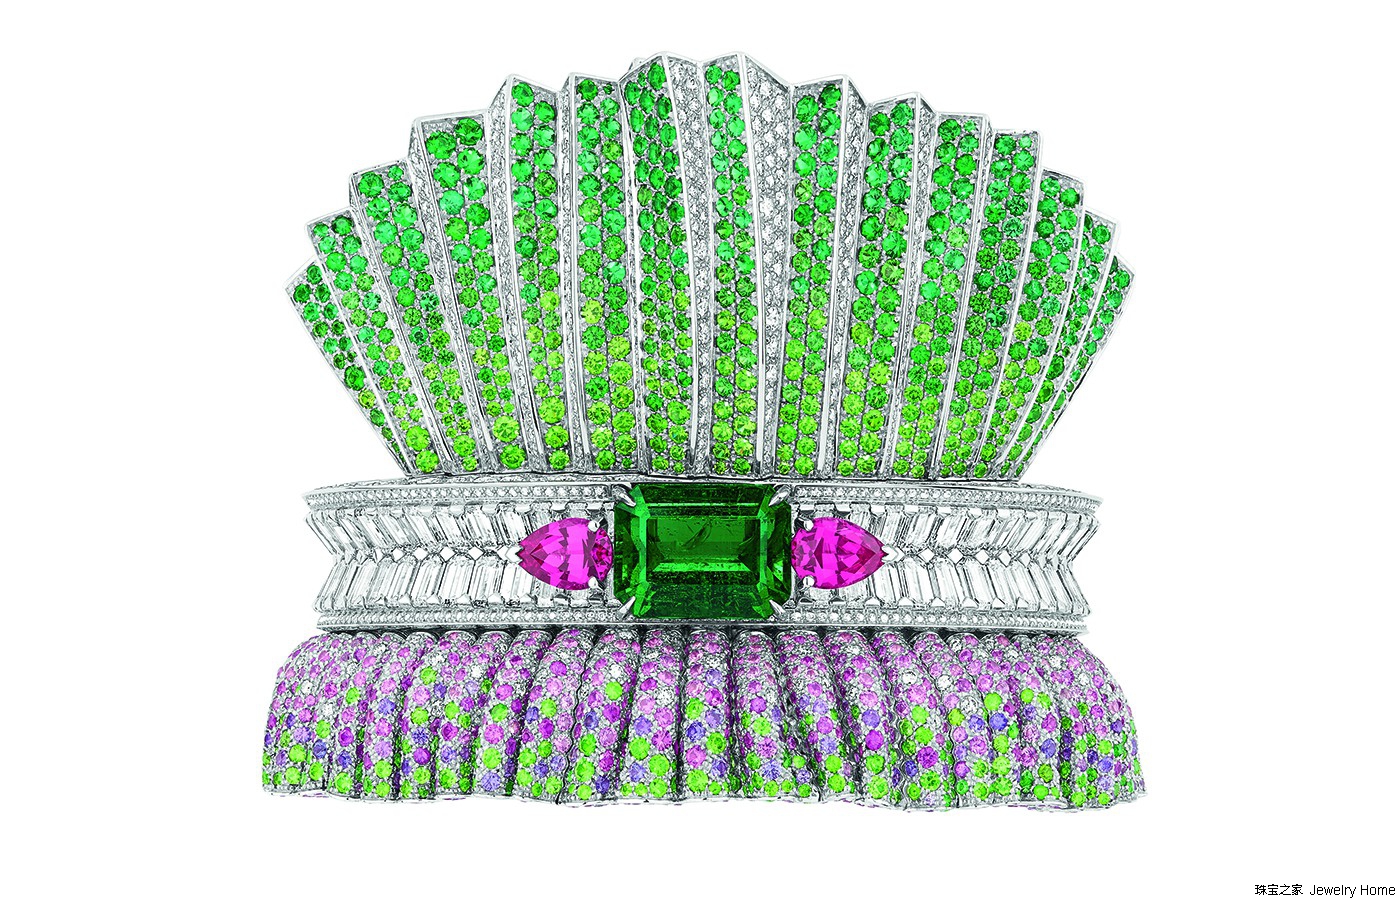 深入解读科普-Archi Dior系列Bar en Corolle高级珠宝镯子 来源于Corolle高端时装的建筑艺术